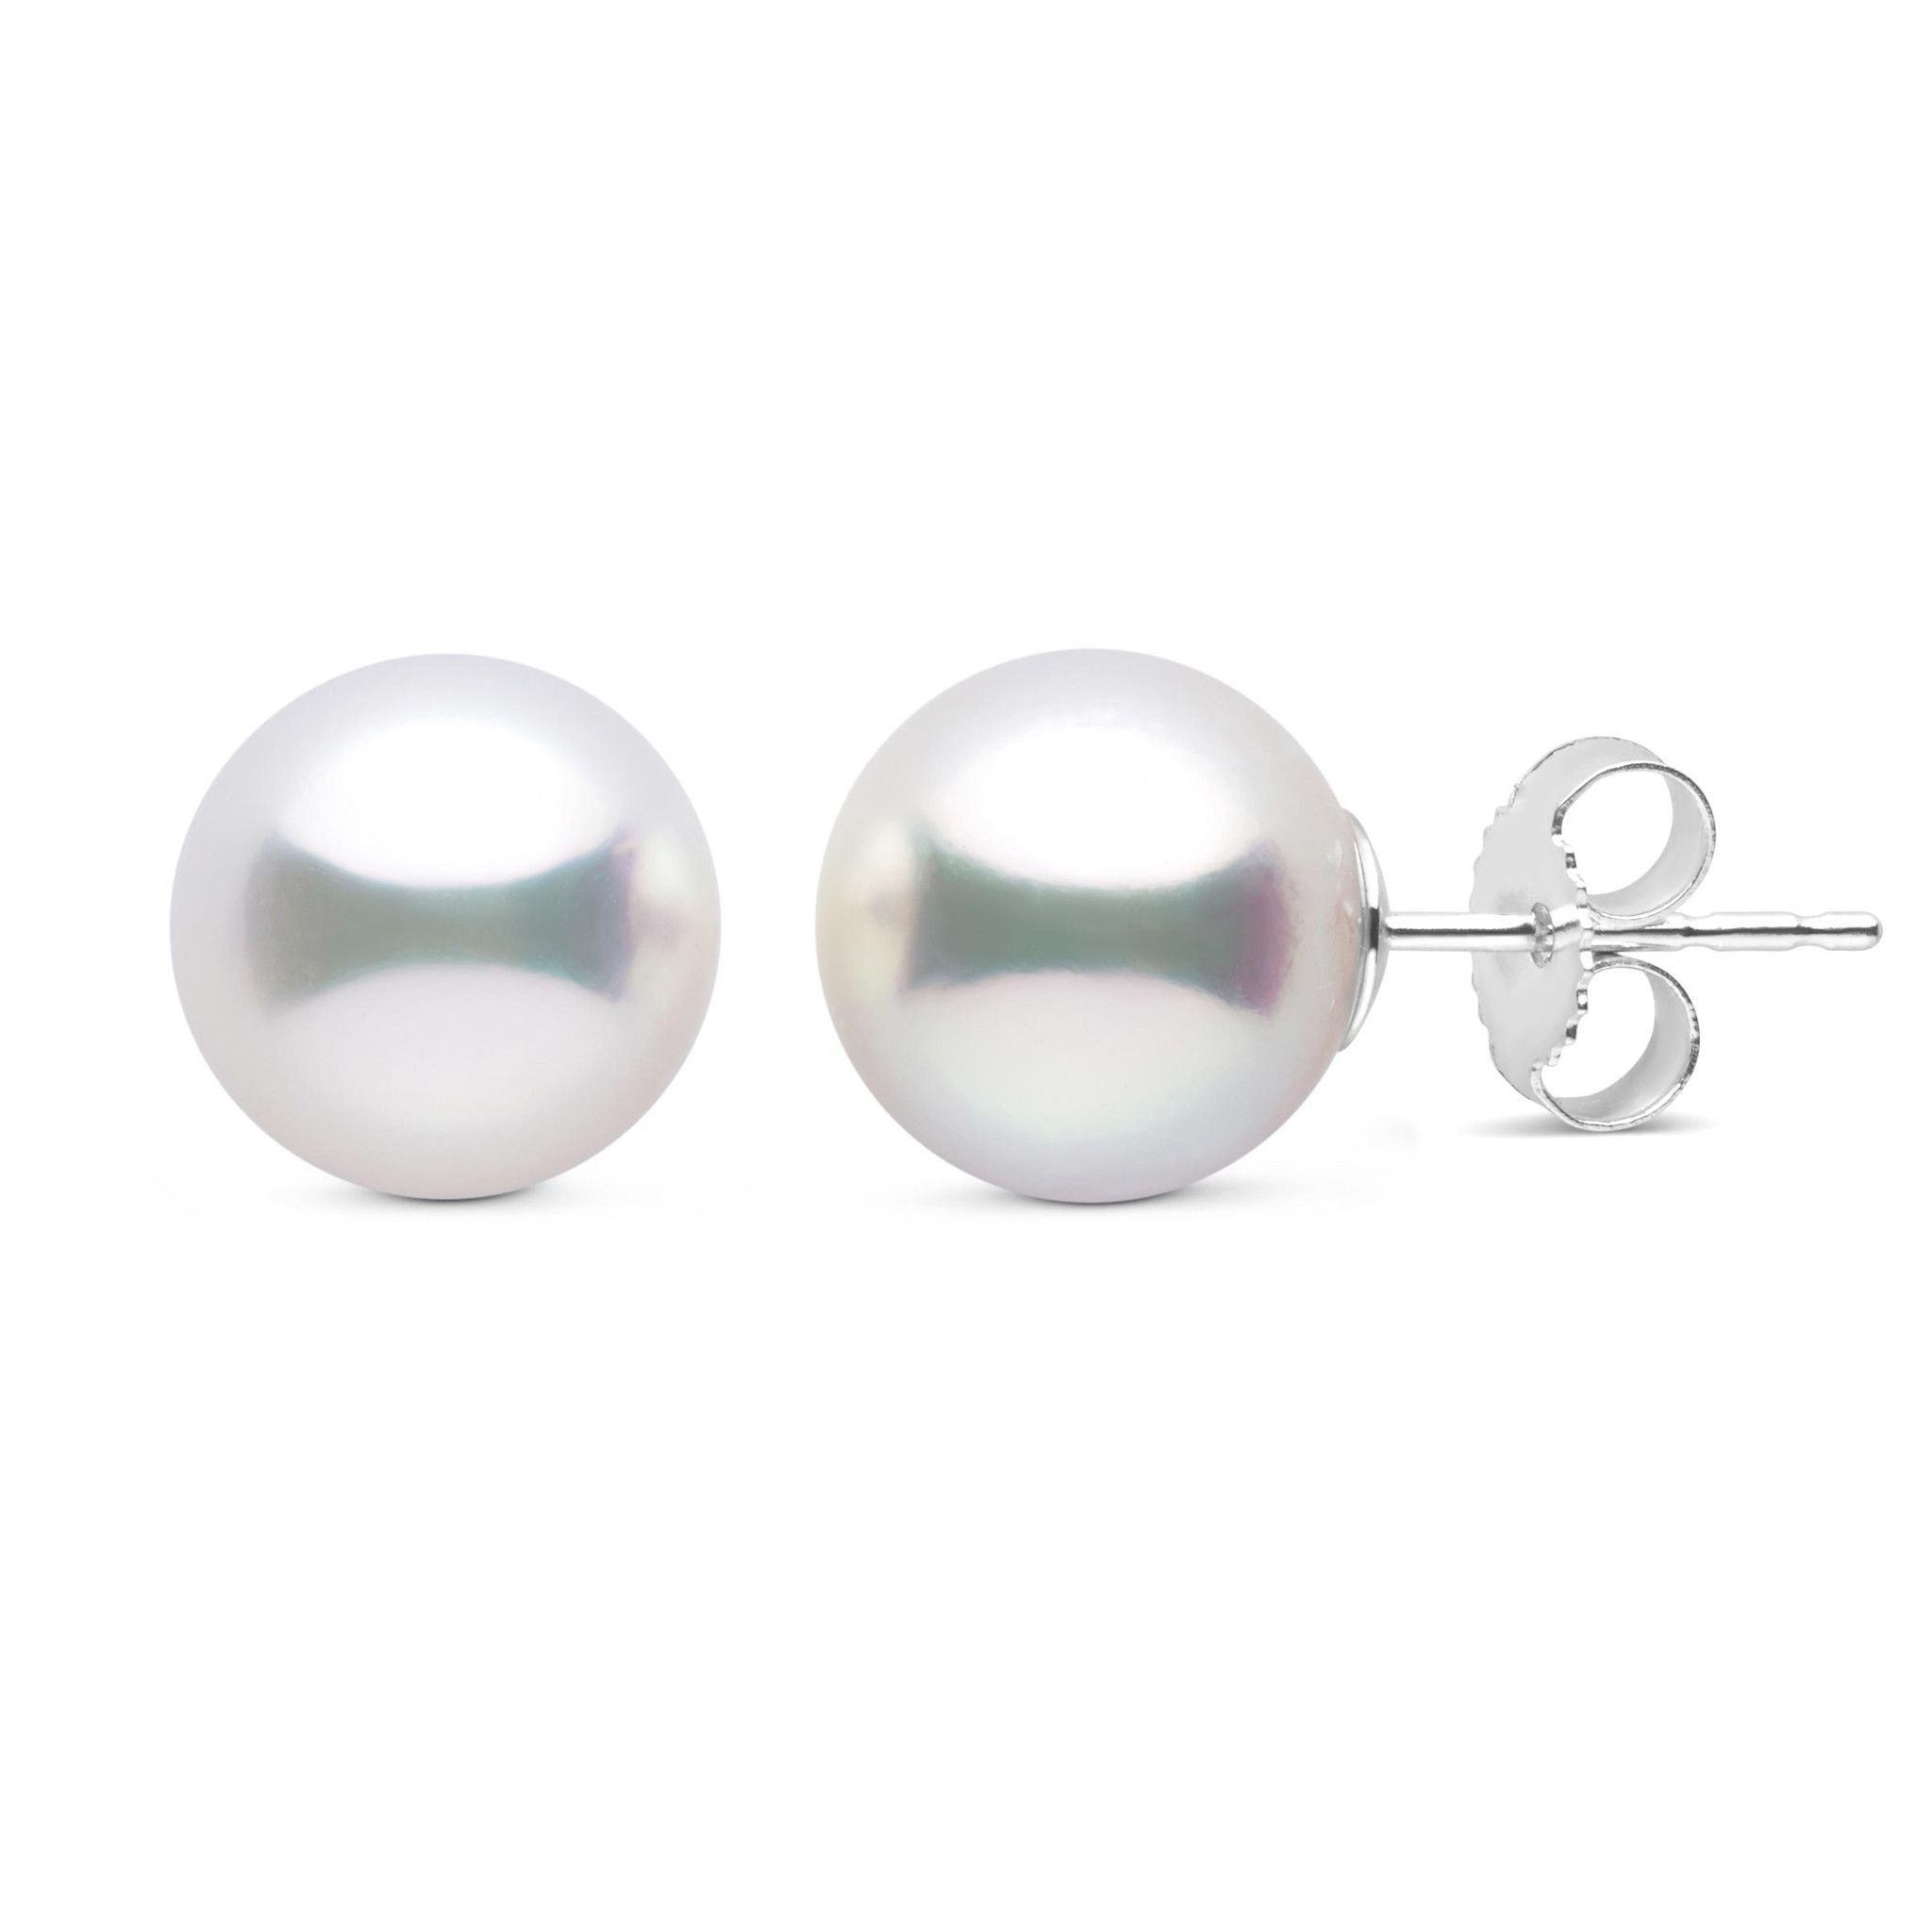 8.0-9.0 mm White South Sea Pearl Stud Earrings